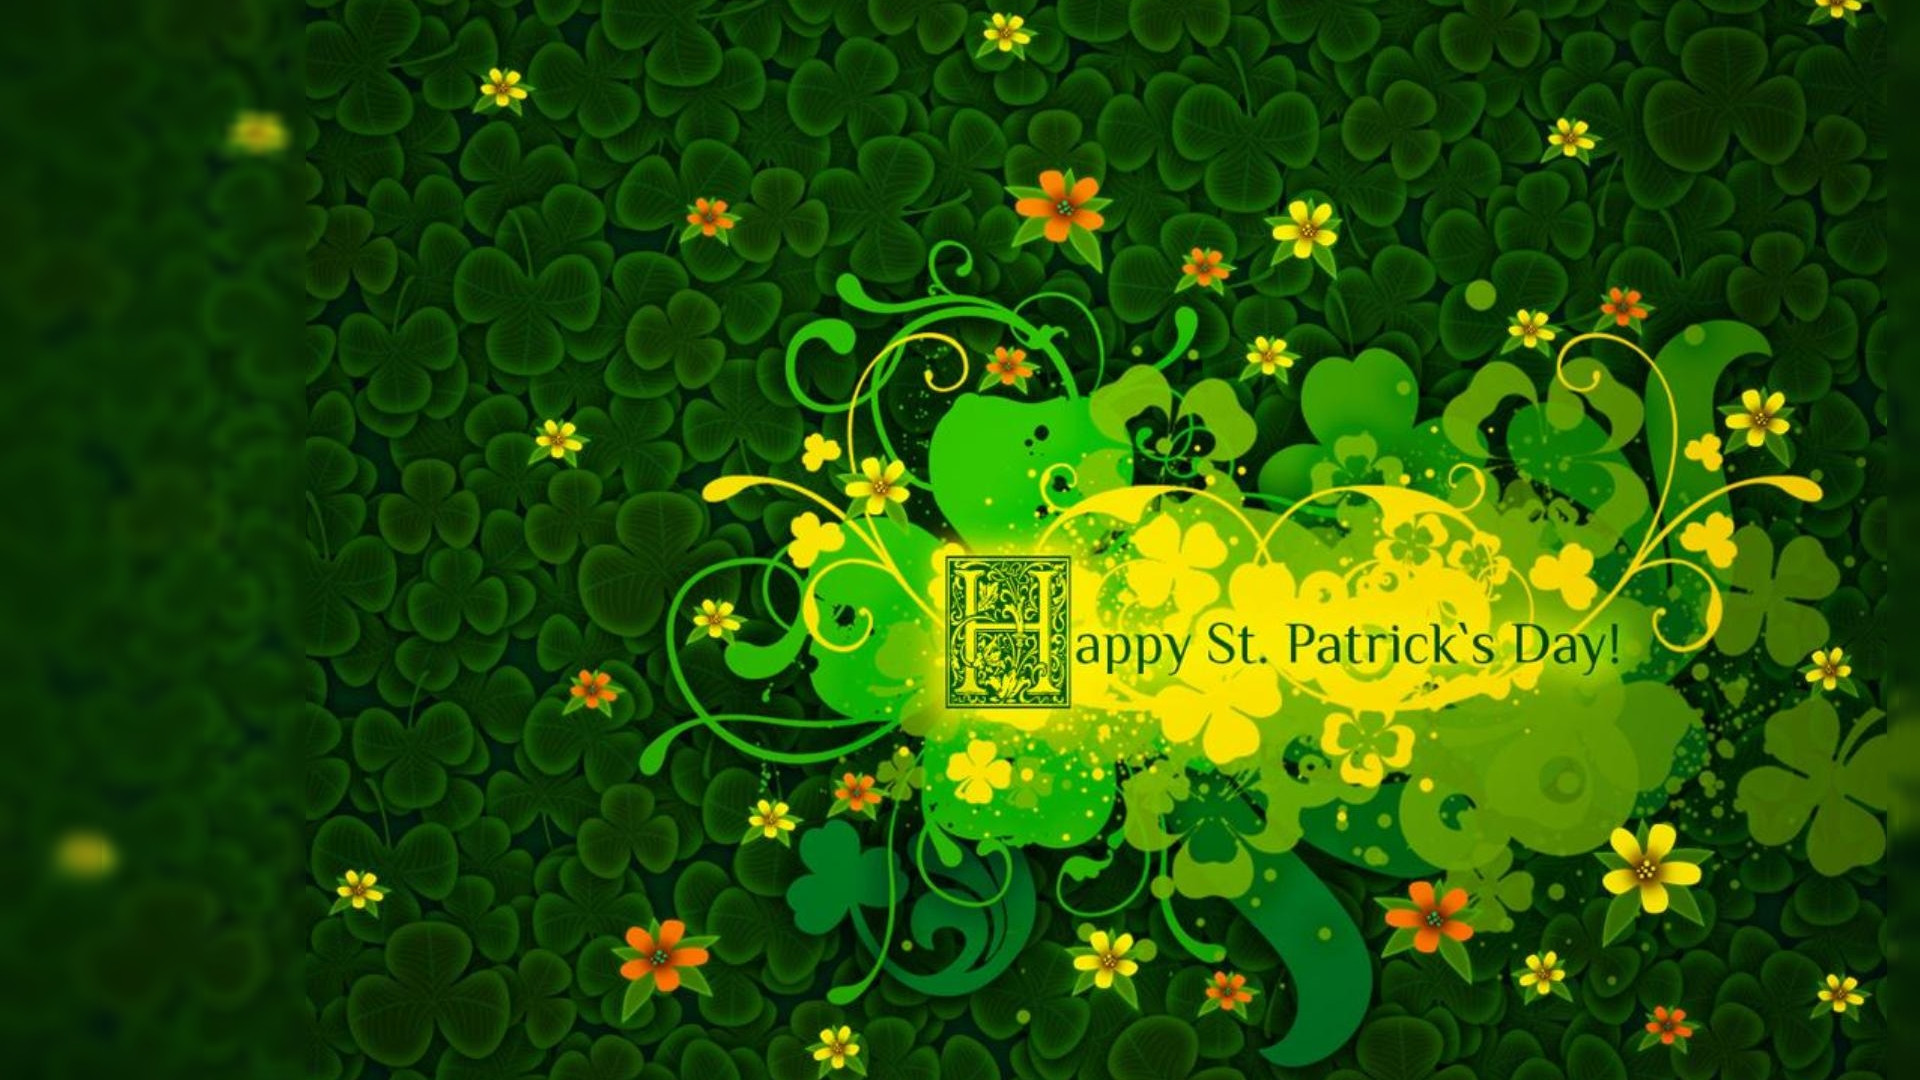 1920x1080 St Patricks Day Desktop Wallpaper 40632 Hd Wallpapers Background 